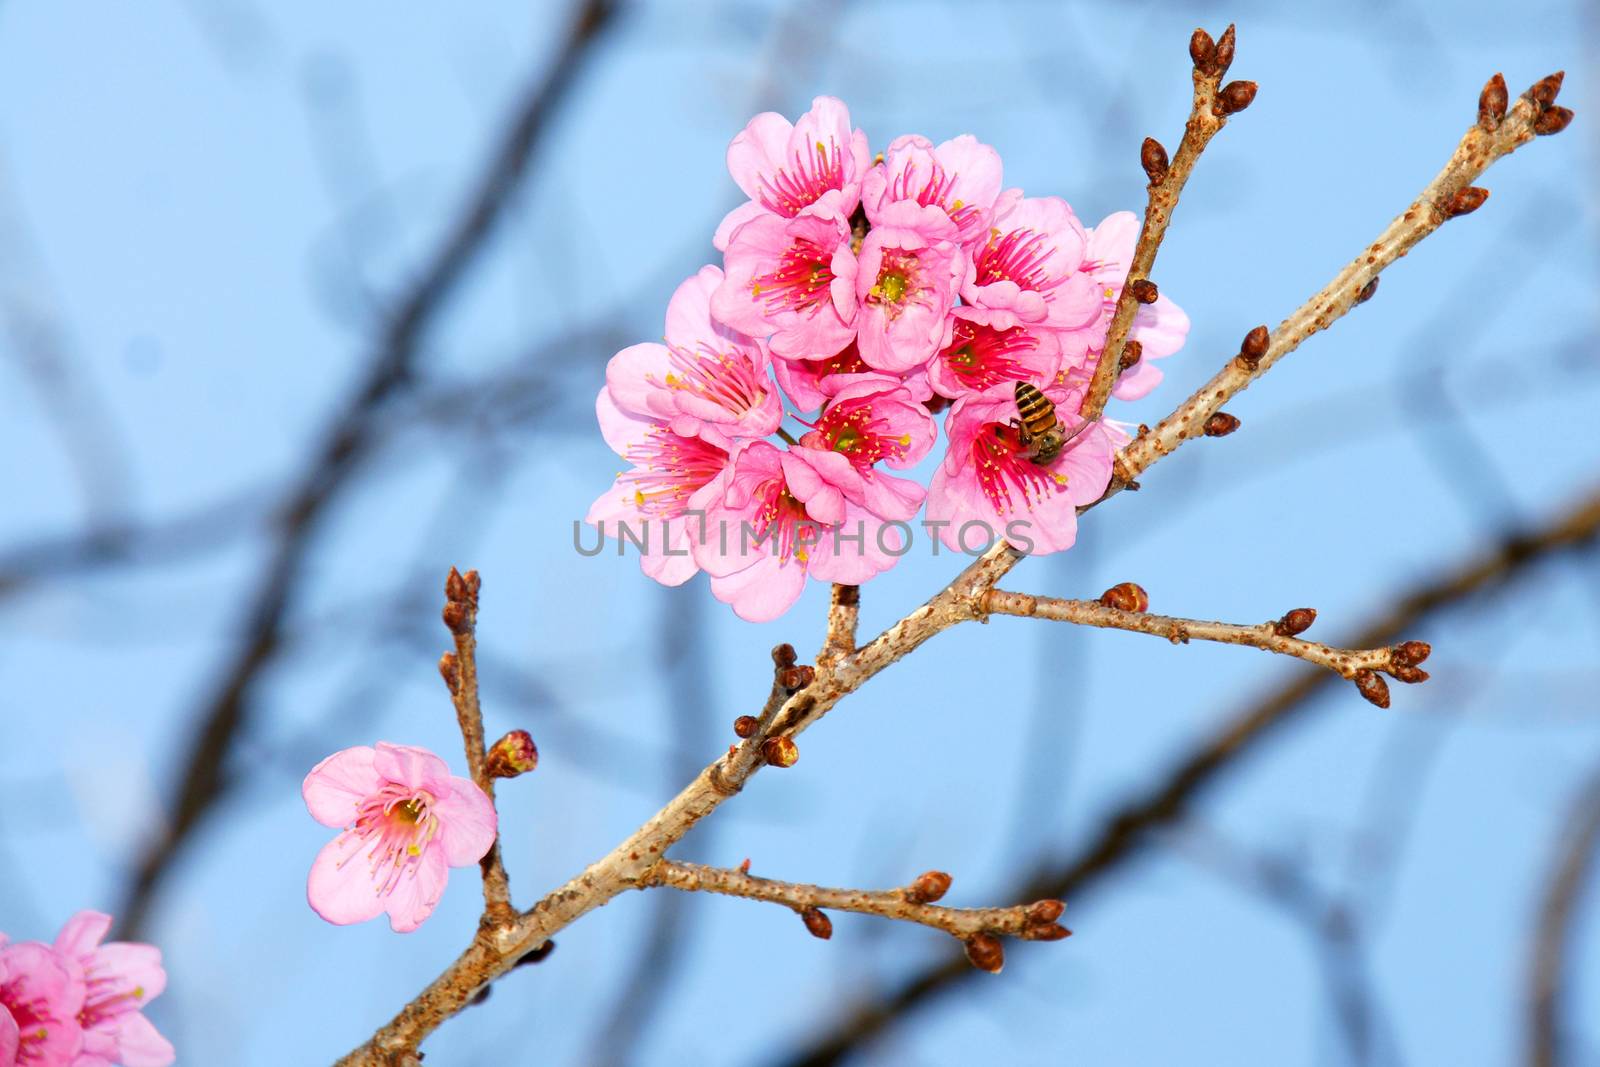 Cherry blossom or Sakura flower with blue sky and bee, Chiangmai Thailand by mranucha